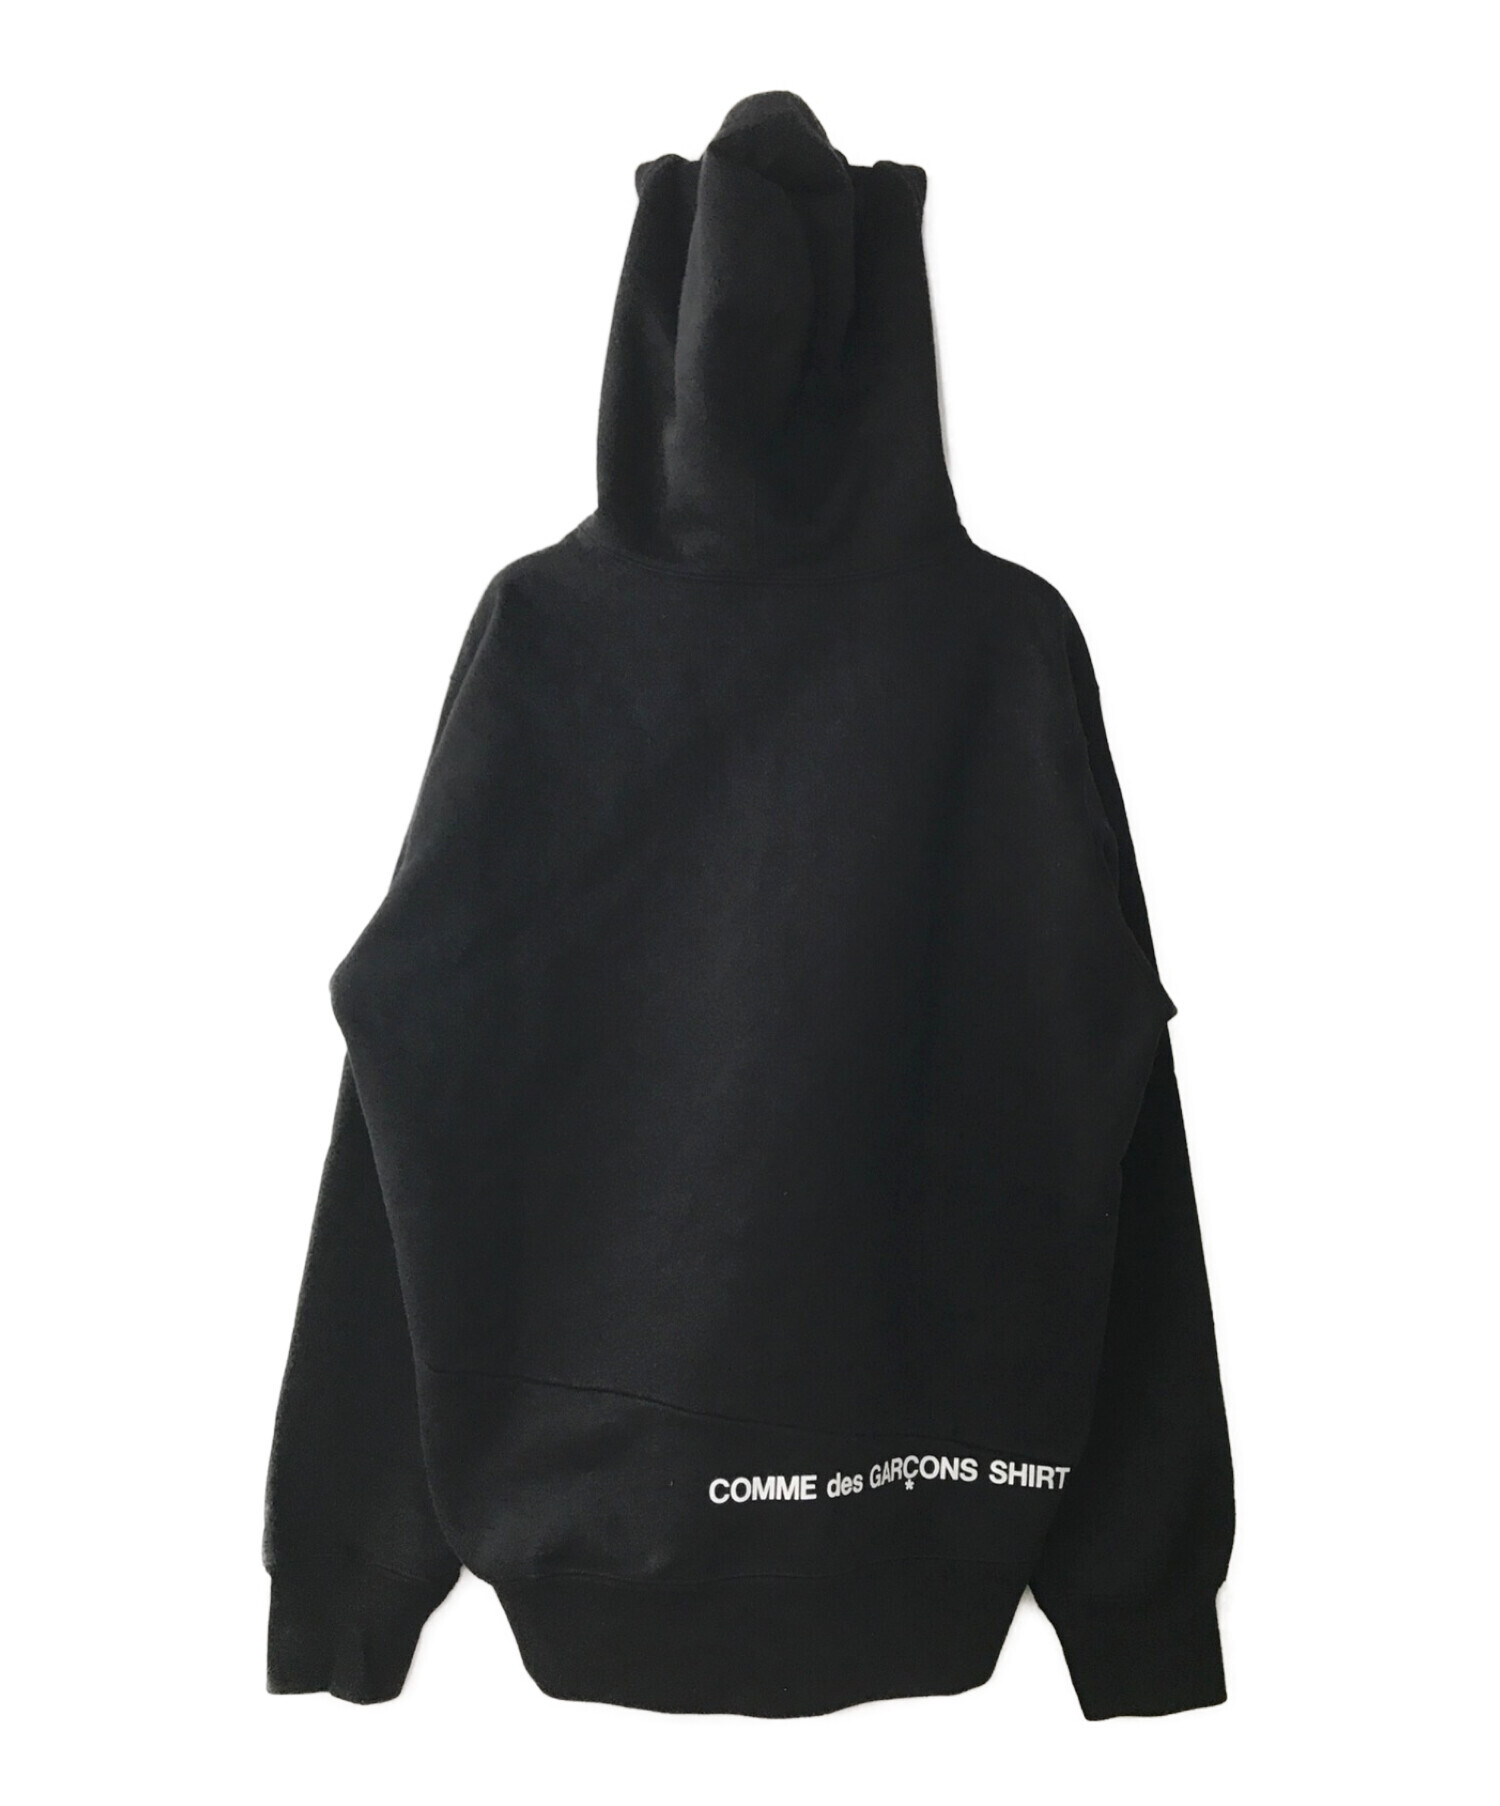 SUPREME (シュプリーム) COMME des GARCONS SHIRT (コムデギャルソンシャツ) Split Box Logo パーカー  ブラック サイズ:M